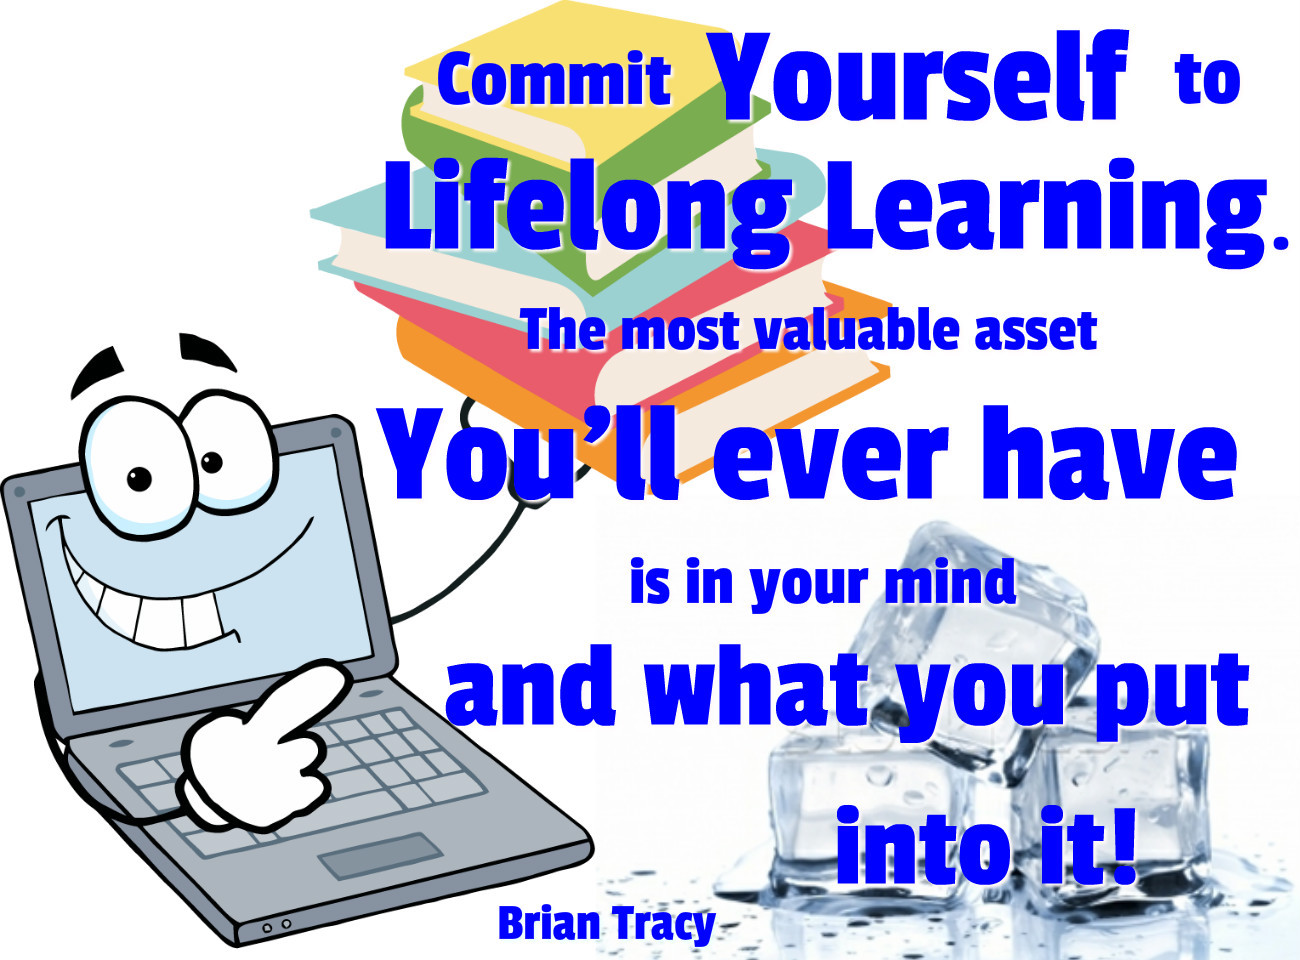 Life learning what is. Концепция lifelong Learning. Life Learning концепция. Lifelong Learning (lll). Концепция lifelong Learning. Непрерывное обучение.